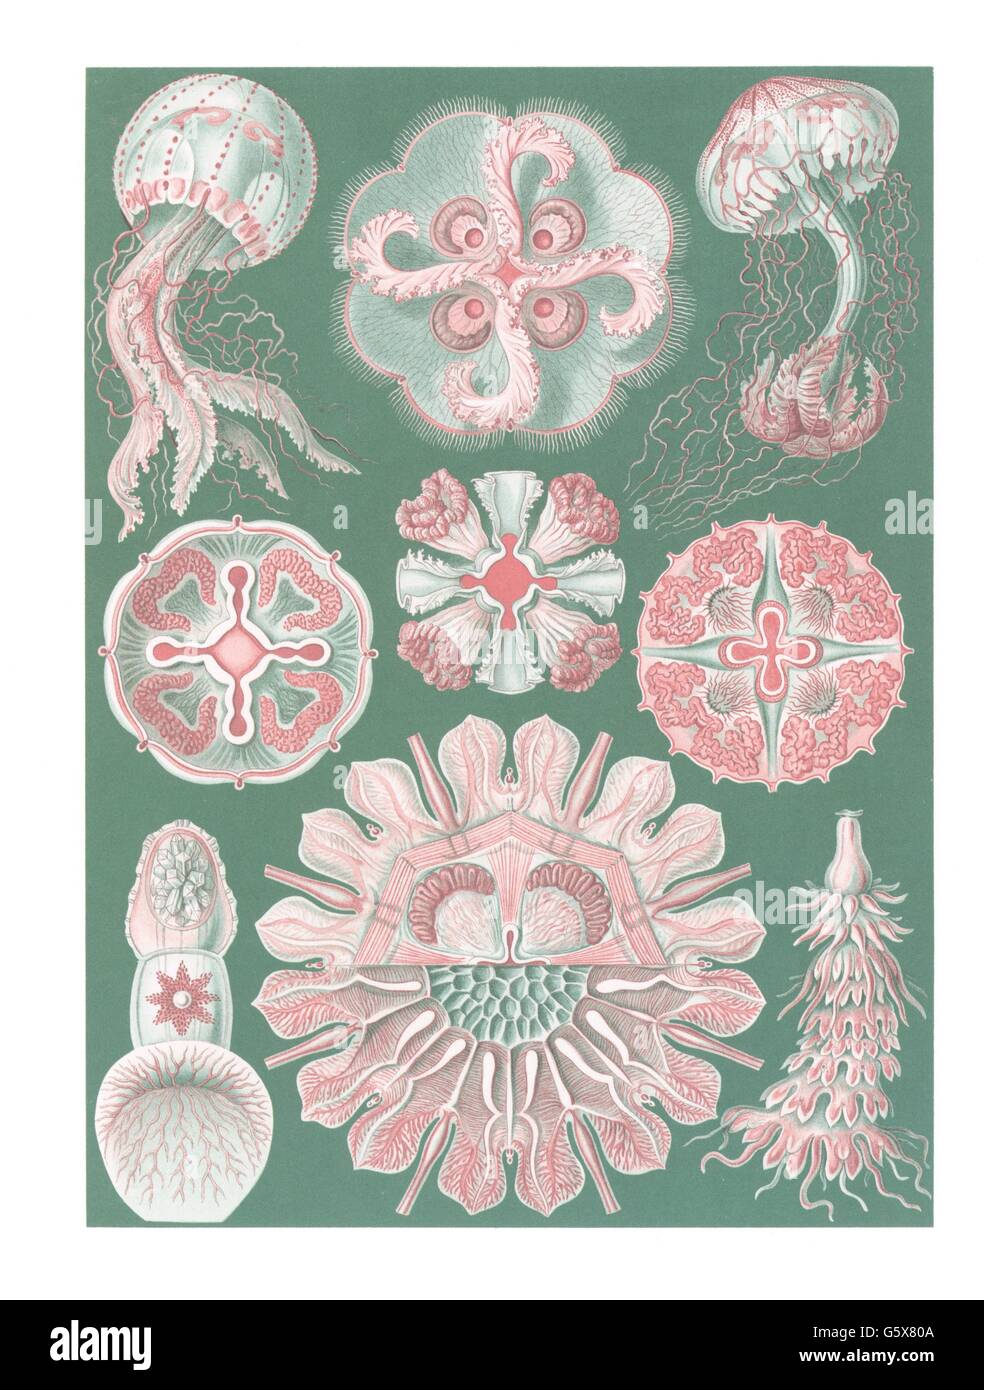 zoologia / Animali, cnidaria, disk jellies (Discomedusae), litografia a colori, su: Ernst Haeckel, Kunstformen der Natur, Leipzig - Vienna, 1899 - 1904, diritti-aggiuntivi-clearences-non disponibili Foto Stock